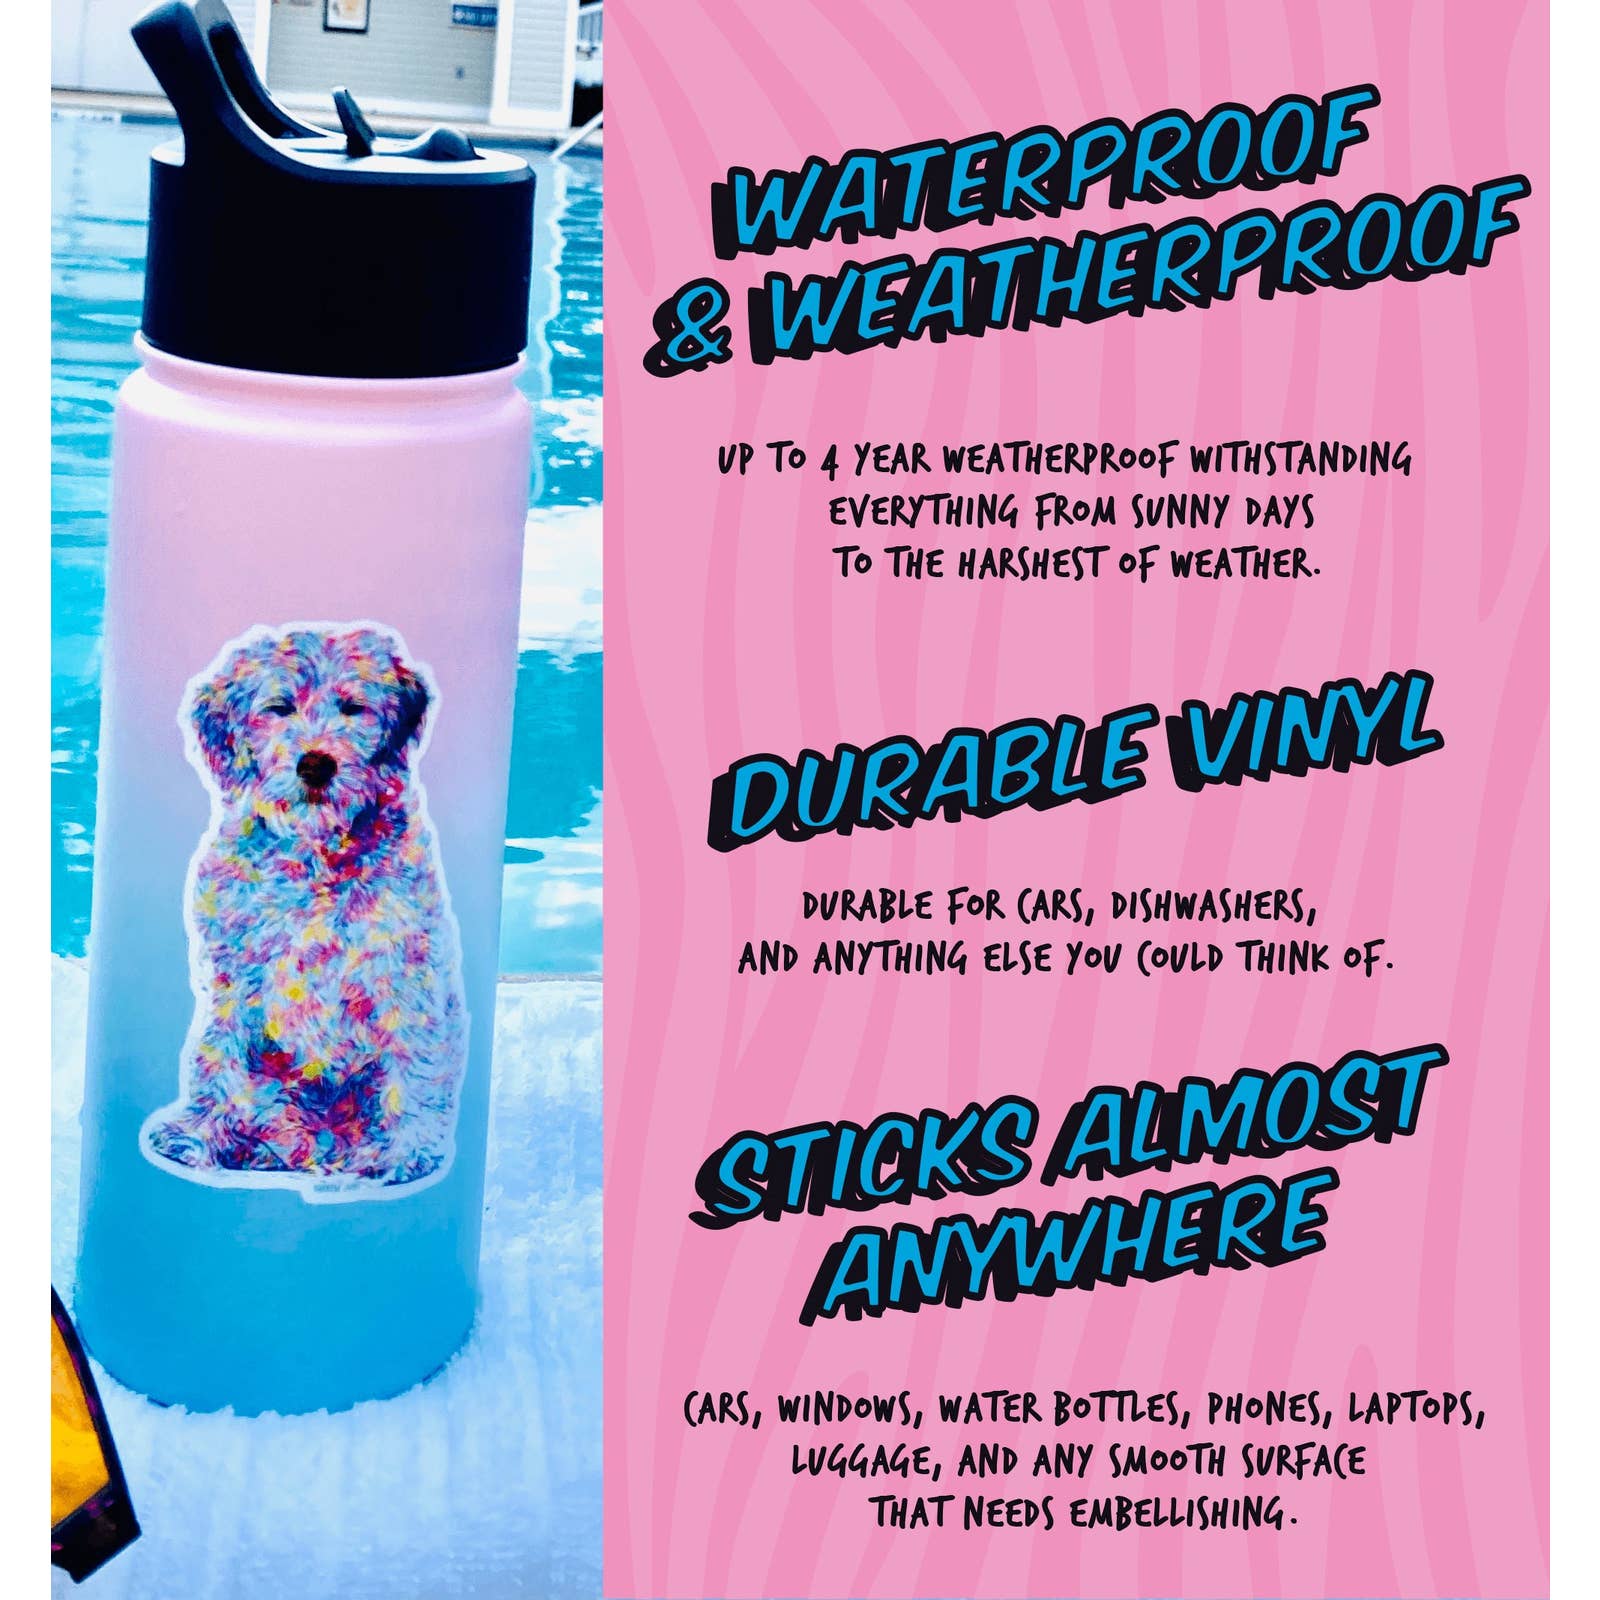 Dead Lift Sticker - Funny Skeleton Coffin Weightlifting Joke Sticker for Gym Water Bottle